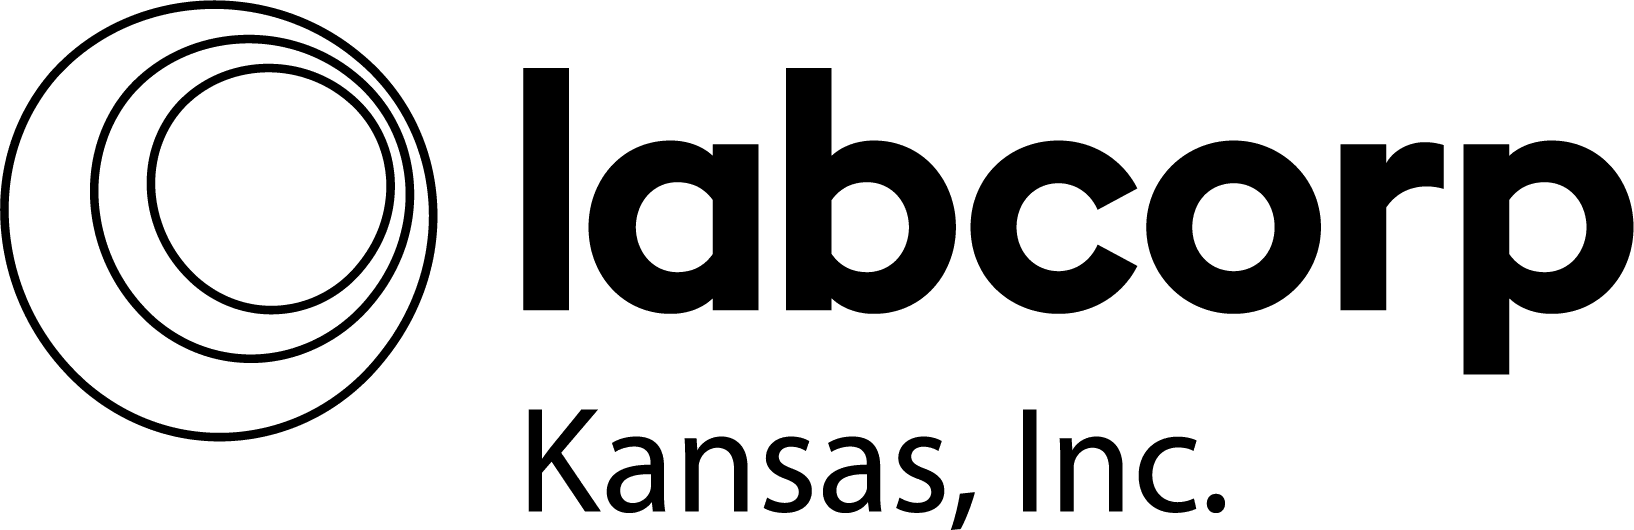 Labcorp Kansas, Inc.